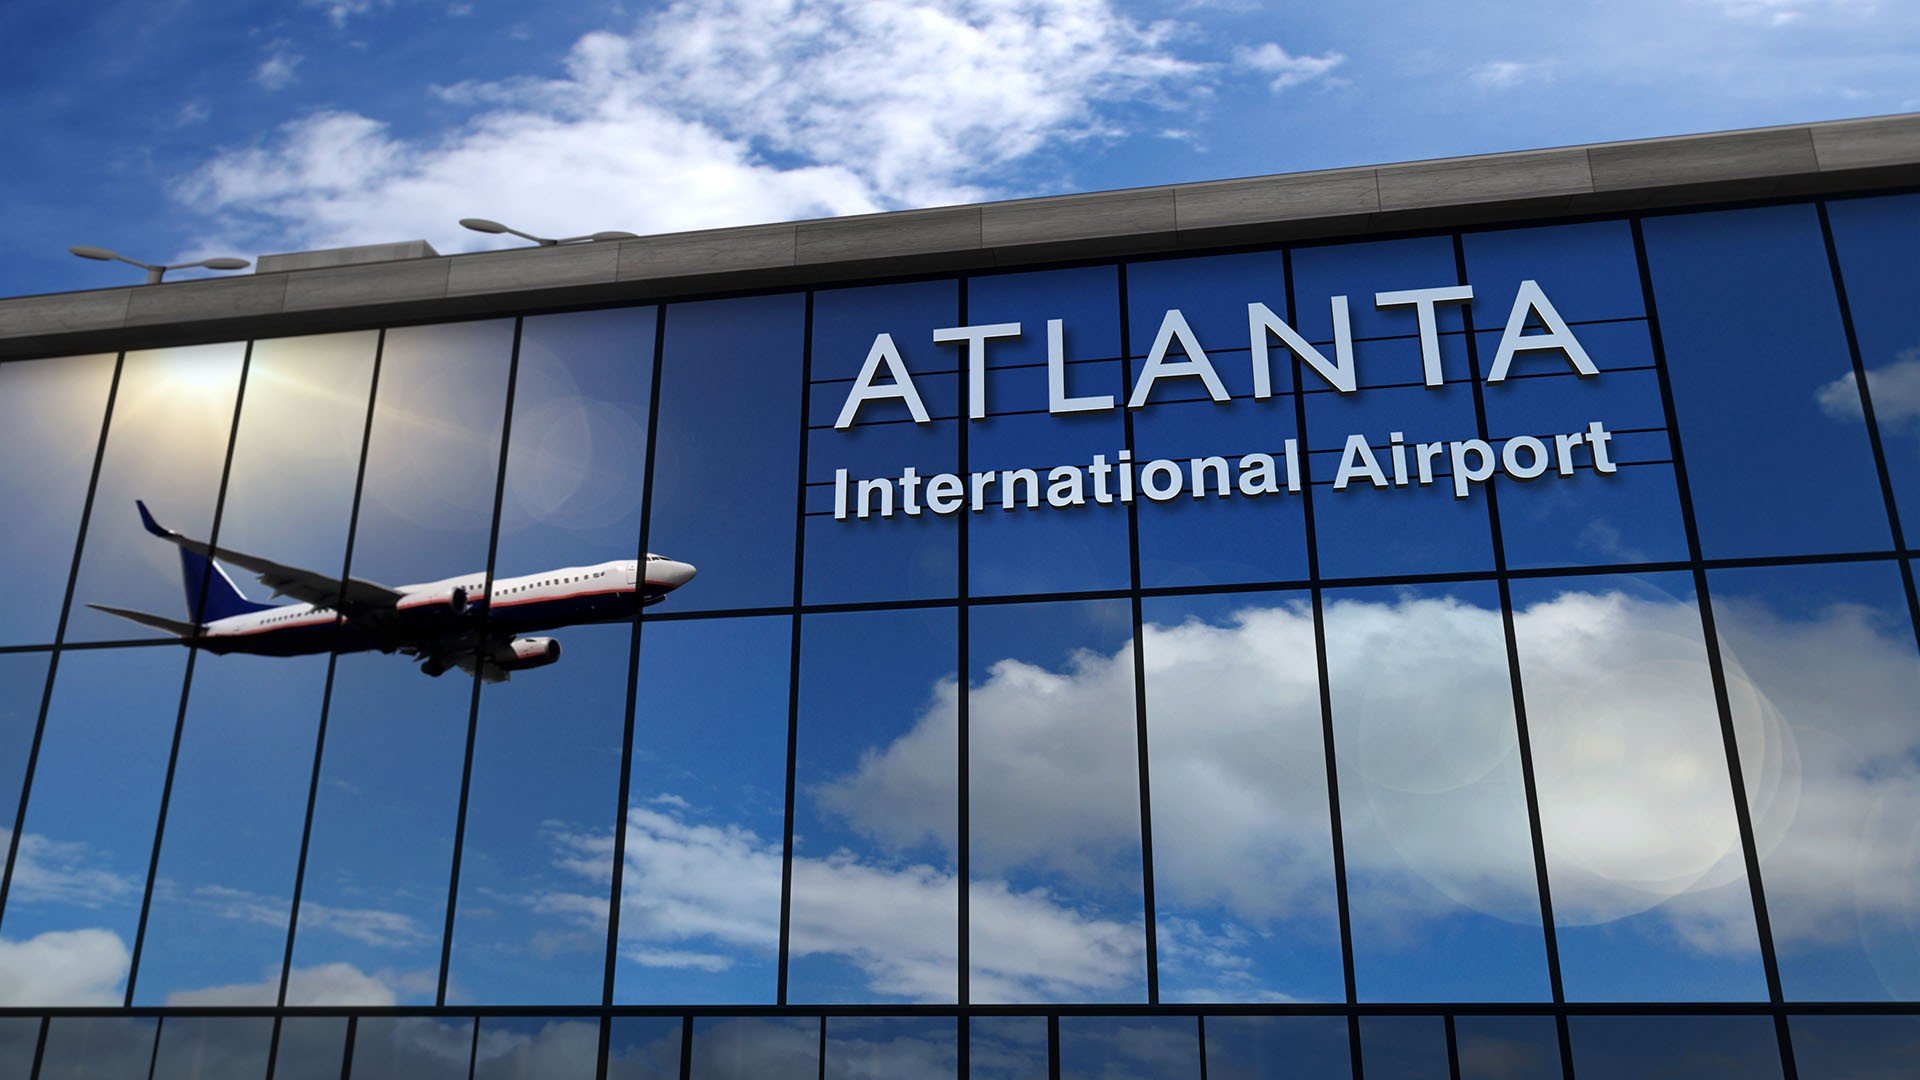 Atlanta limo service providing on time airport transportation to Hartsfield-Jackson Atlanta International Airport. 